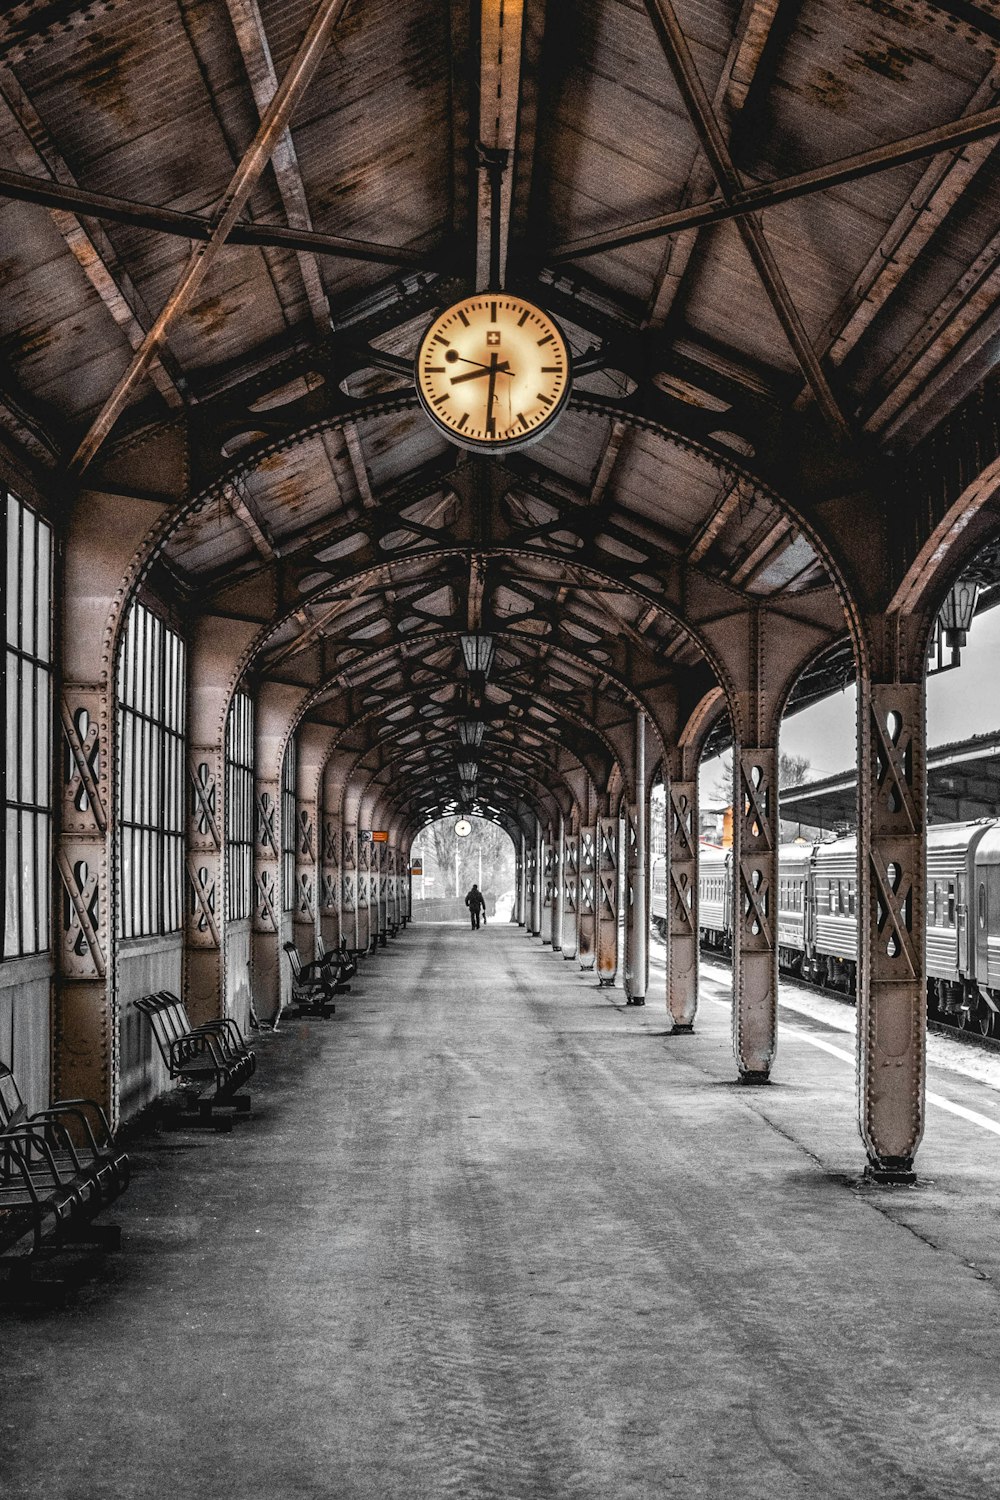 estación de tren